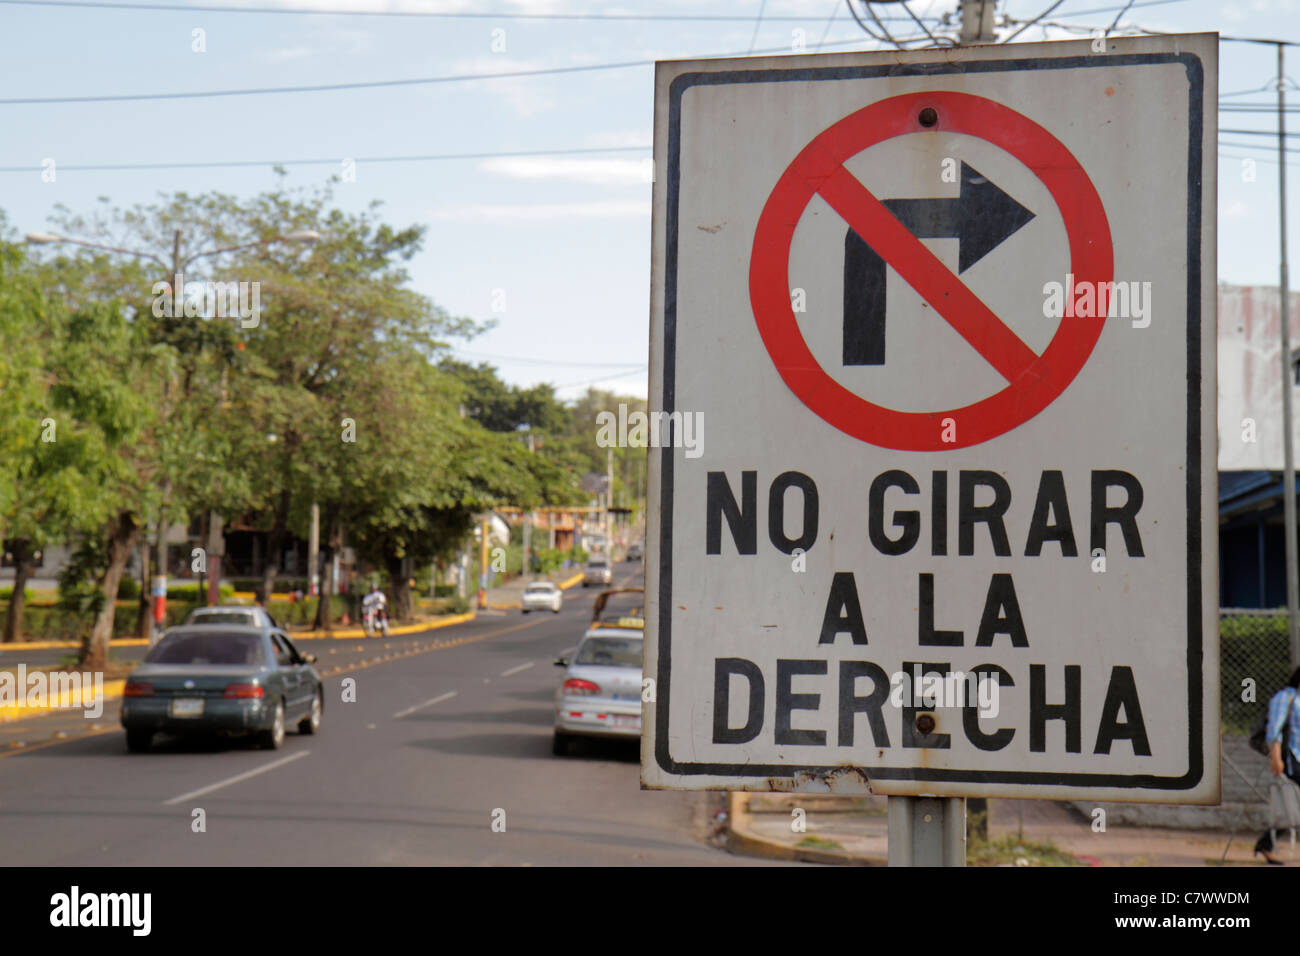 Managua Nicaragua,Central America,Avenida Simon Bolivar,street scene,traffic,road,sign,logo,information,prohibit,no,symbol,no right turn,Spanish,langu Stock Photo